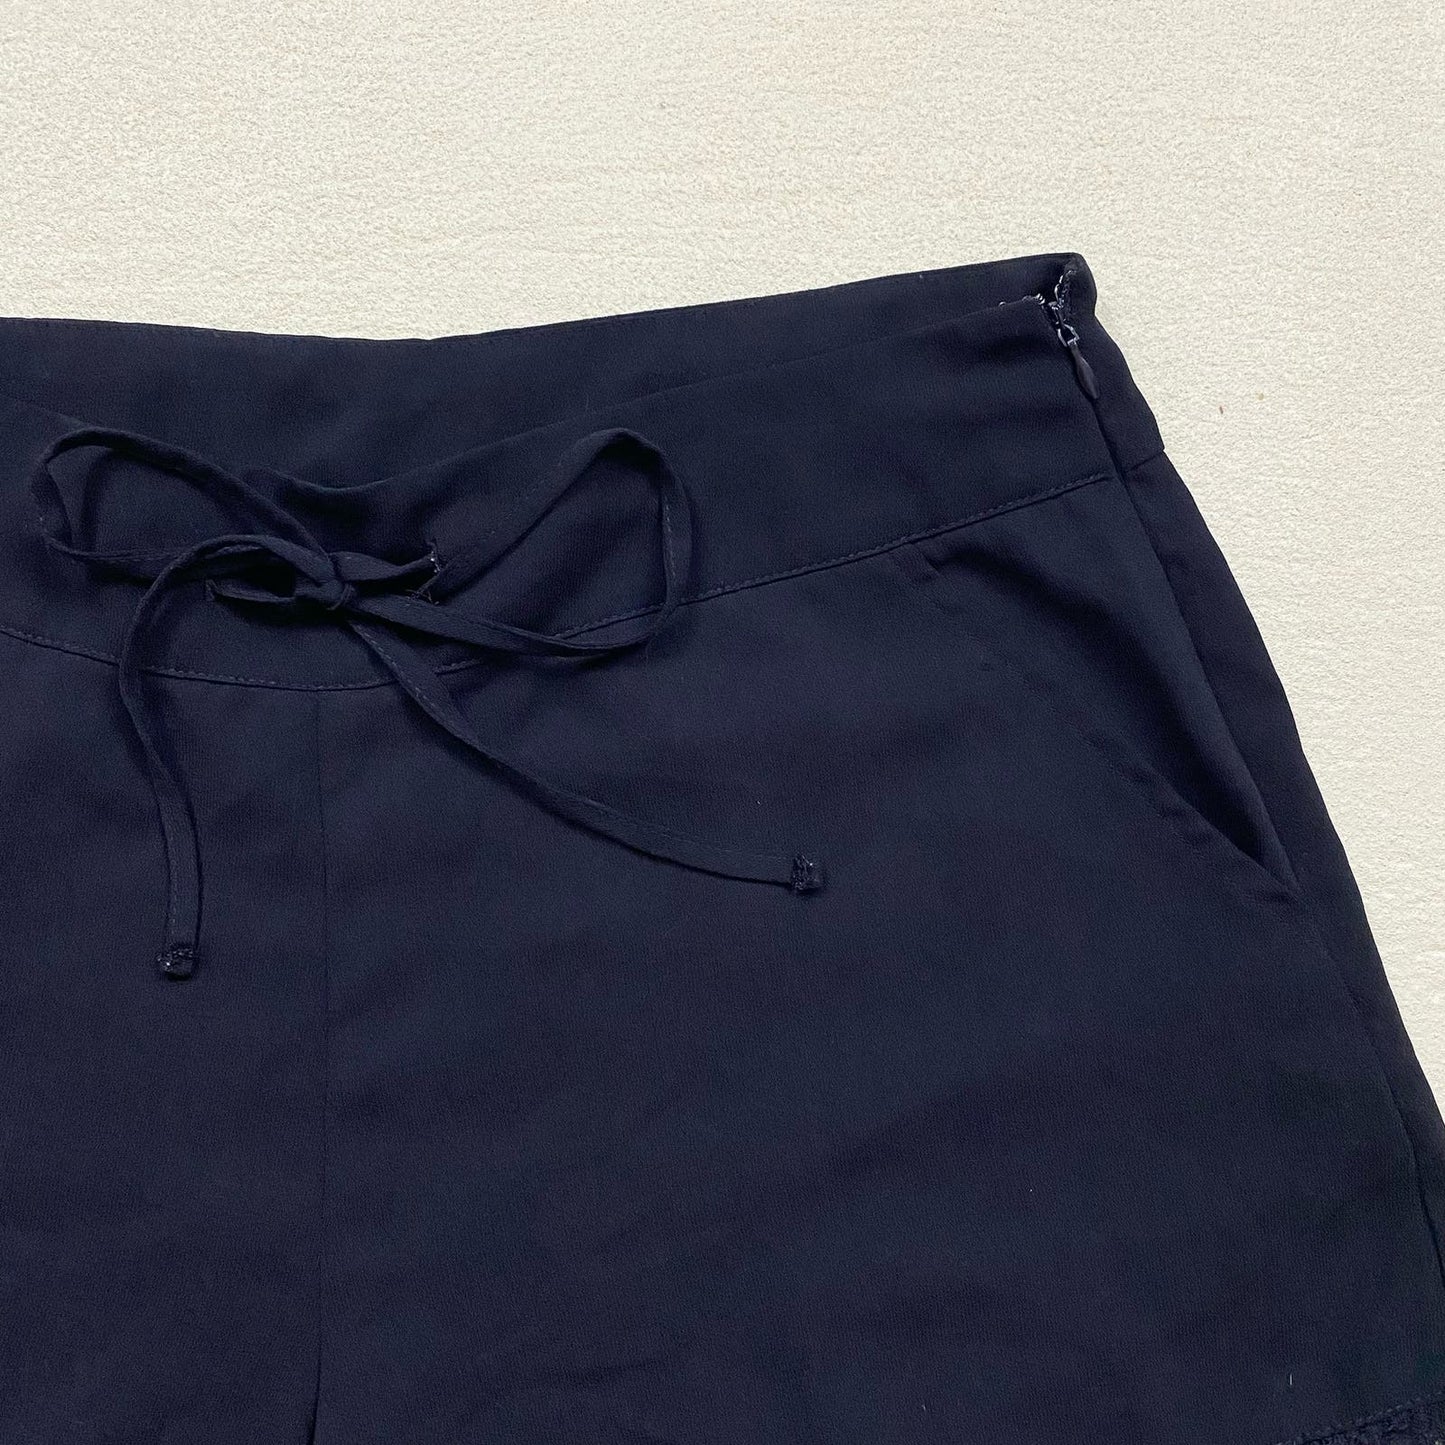 Secondhand Ellison Black Lace Trim Drawstring Shorts, Size Medium